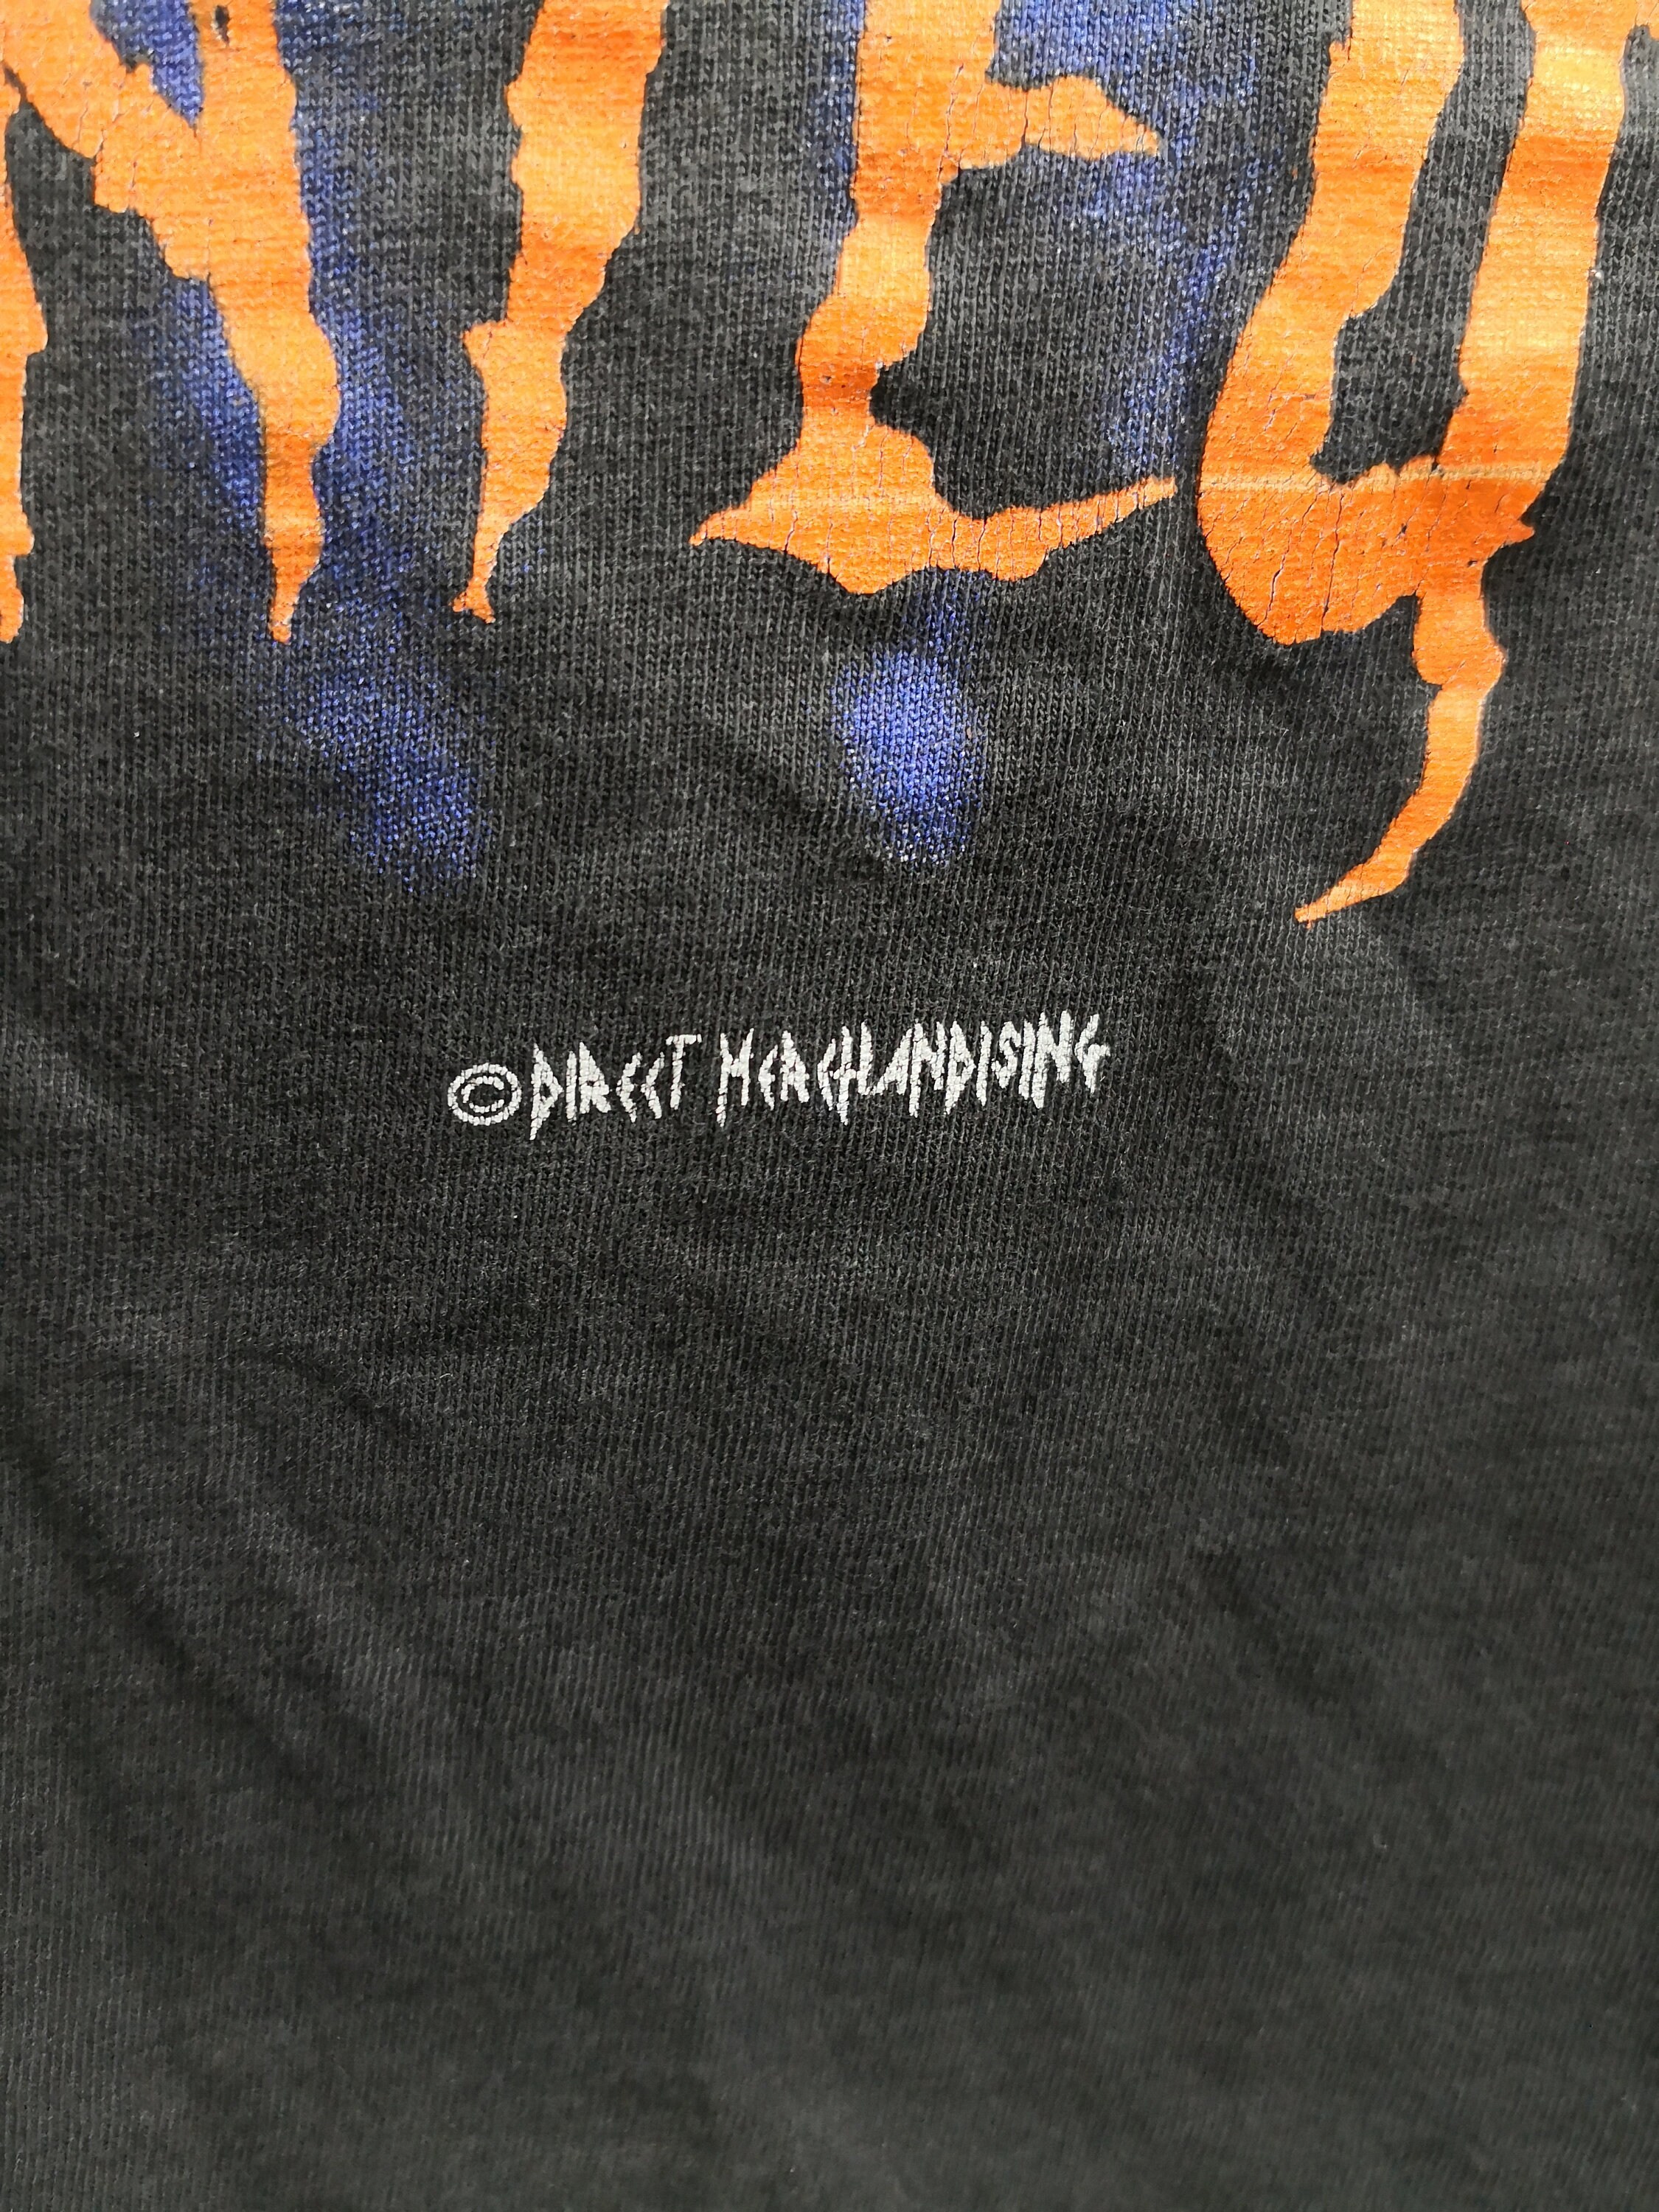 SIX FEET UNDER 1995 Vintage T-Shirt Haunted / Death Metal / | Etsy